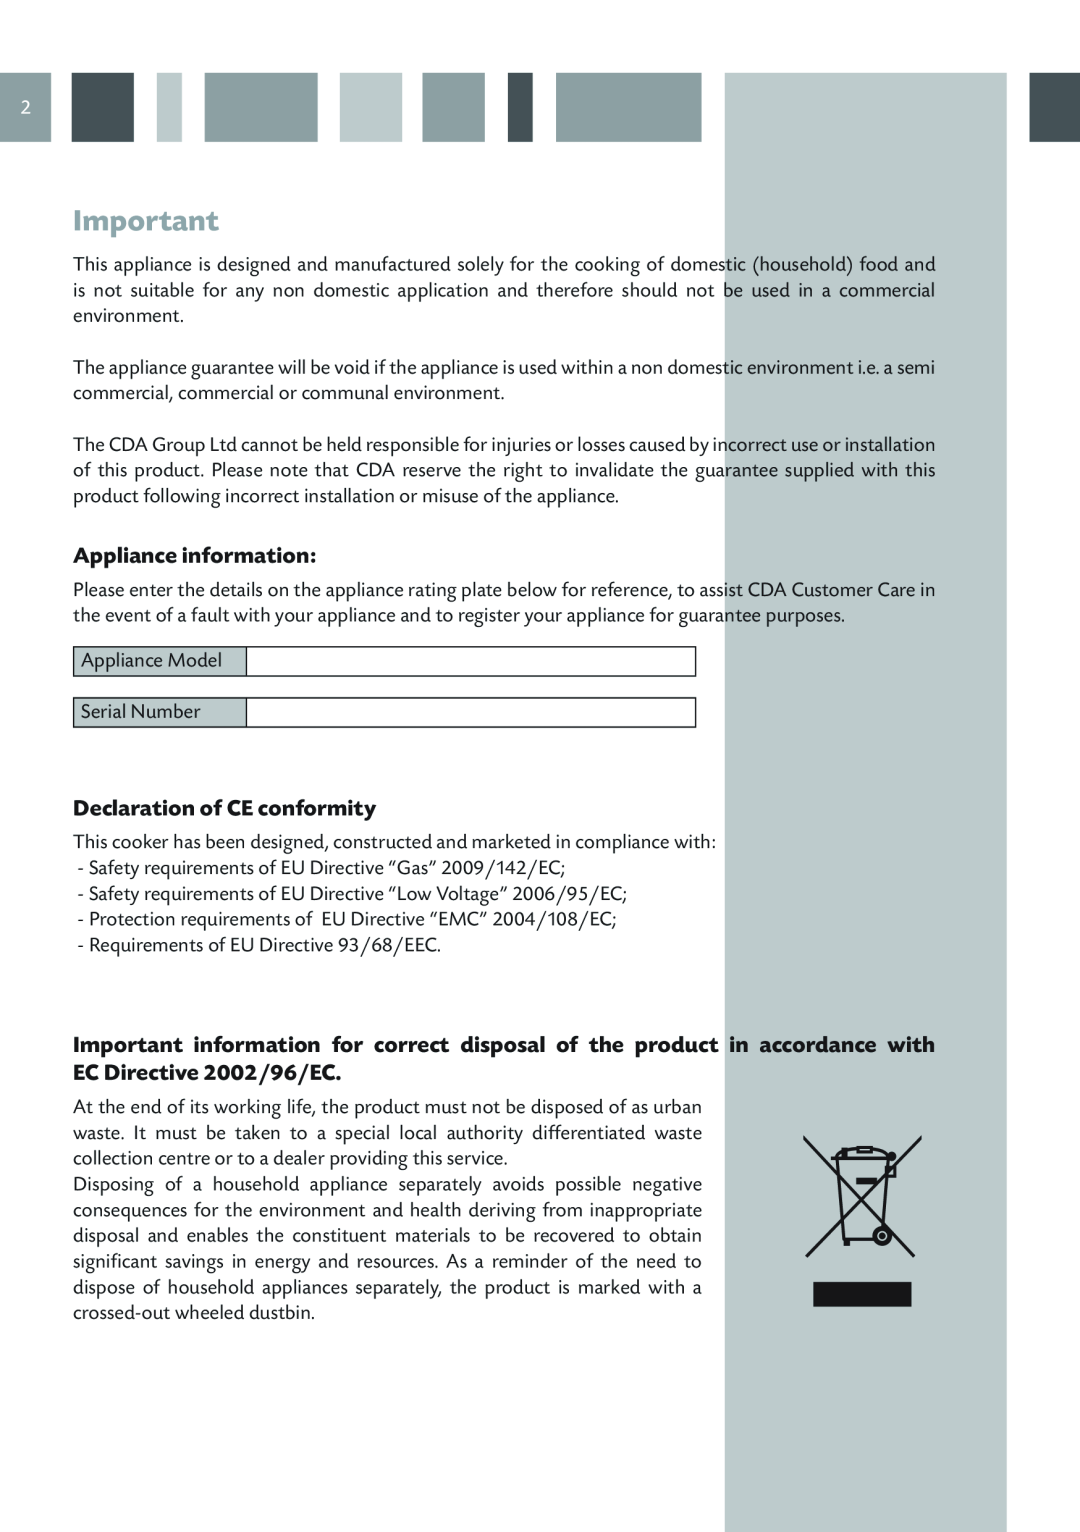 CDA RV 901, RV 1001 manual Appliance information, Declaration of CE conformity 